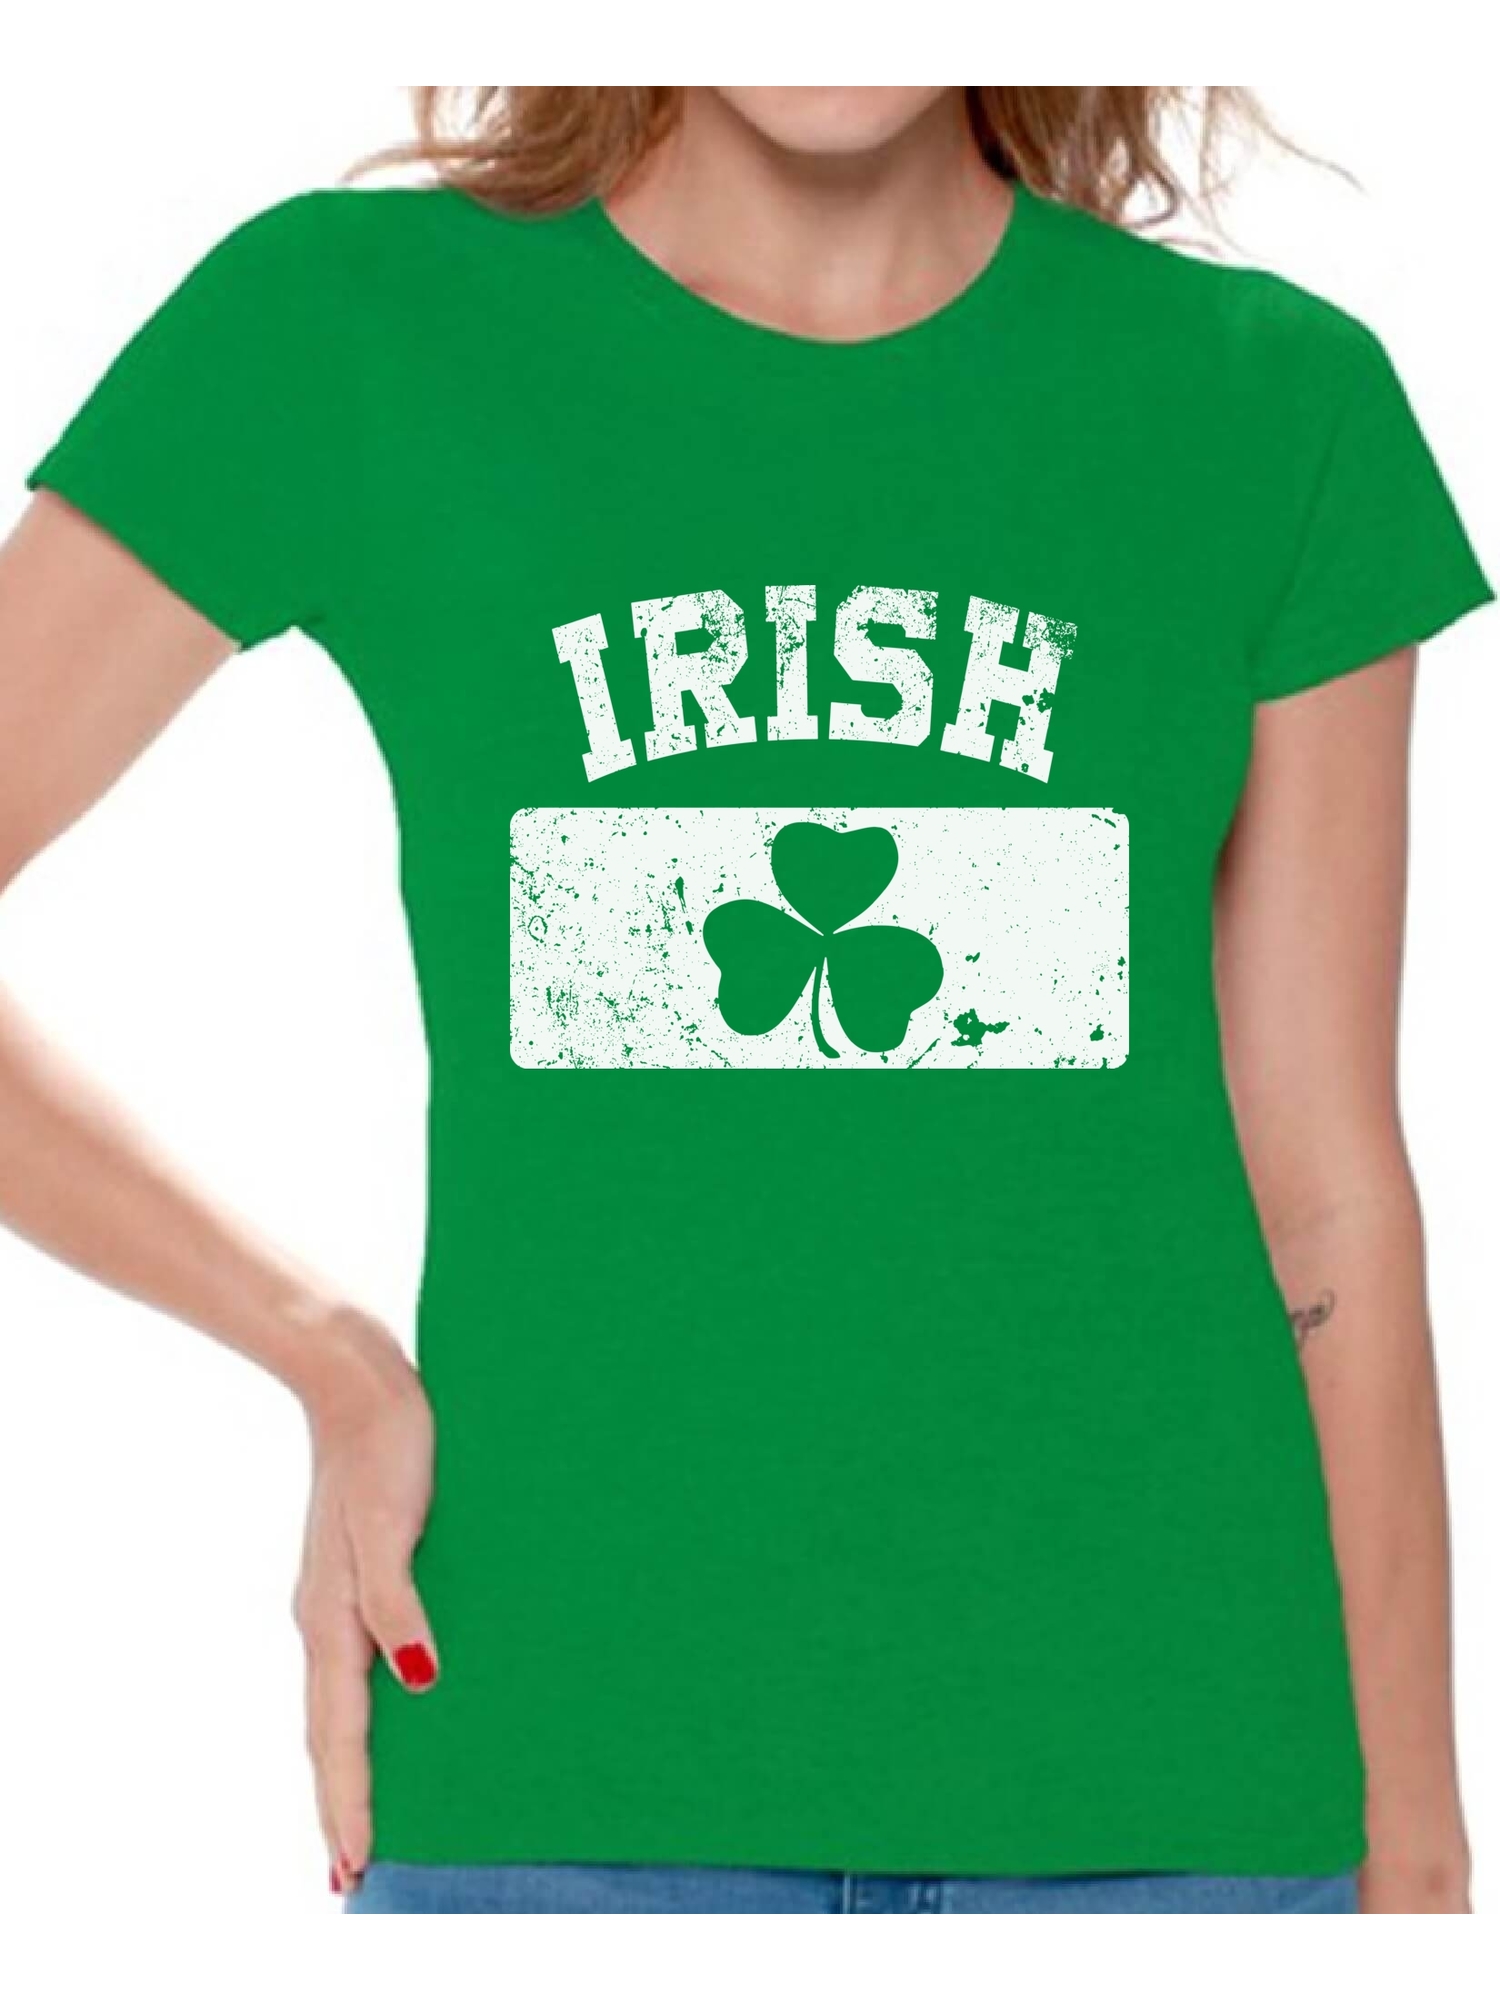 Awkward Styles Irish Shirt St. Patricks Day Ireland T-Shirt Irish Shirt Women St Patrick's Day Shirt for Women Irish Green Shamrock Shirt St Patricks Day Gifts Irish Gift Ideas for Women - image 1 of 4